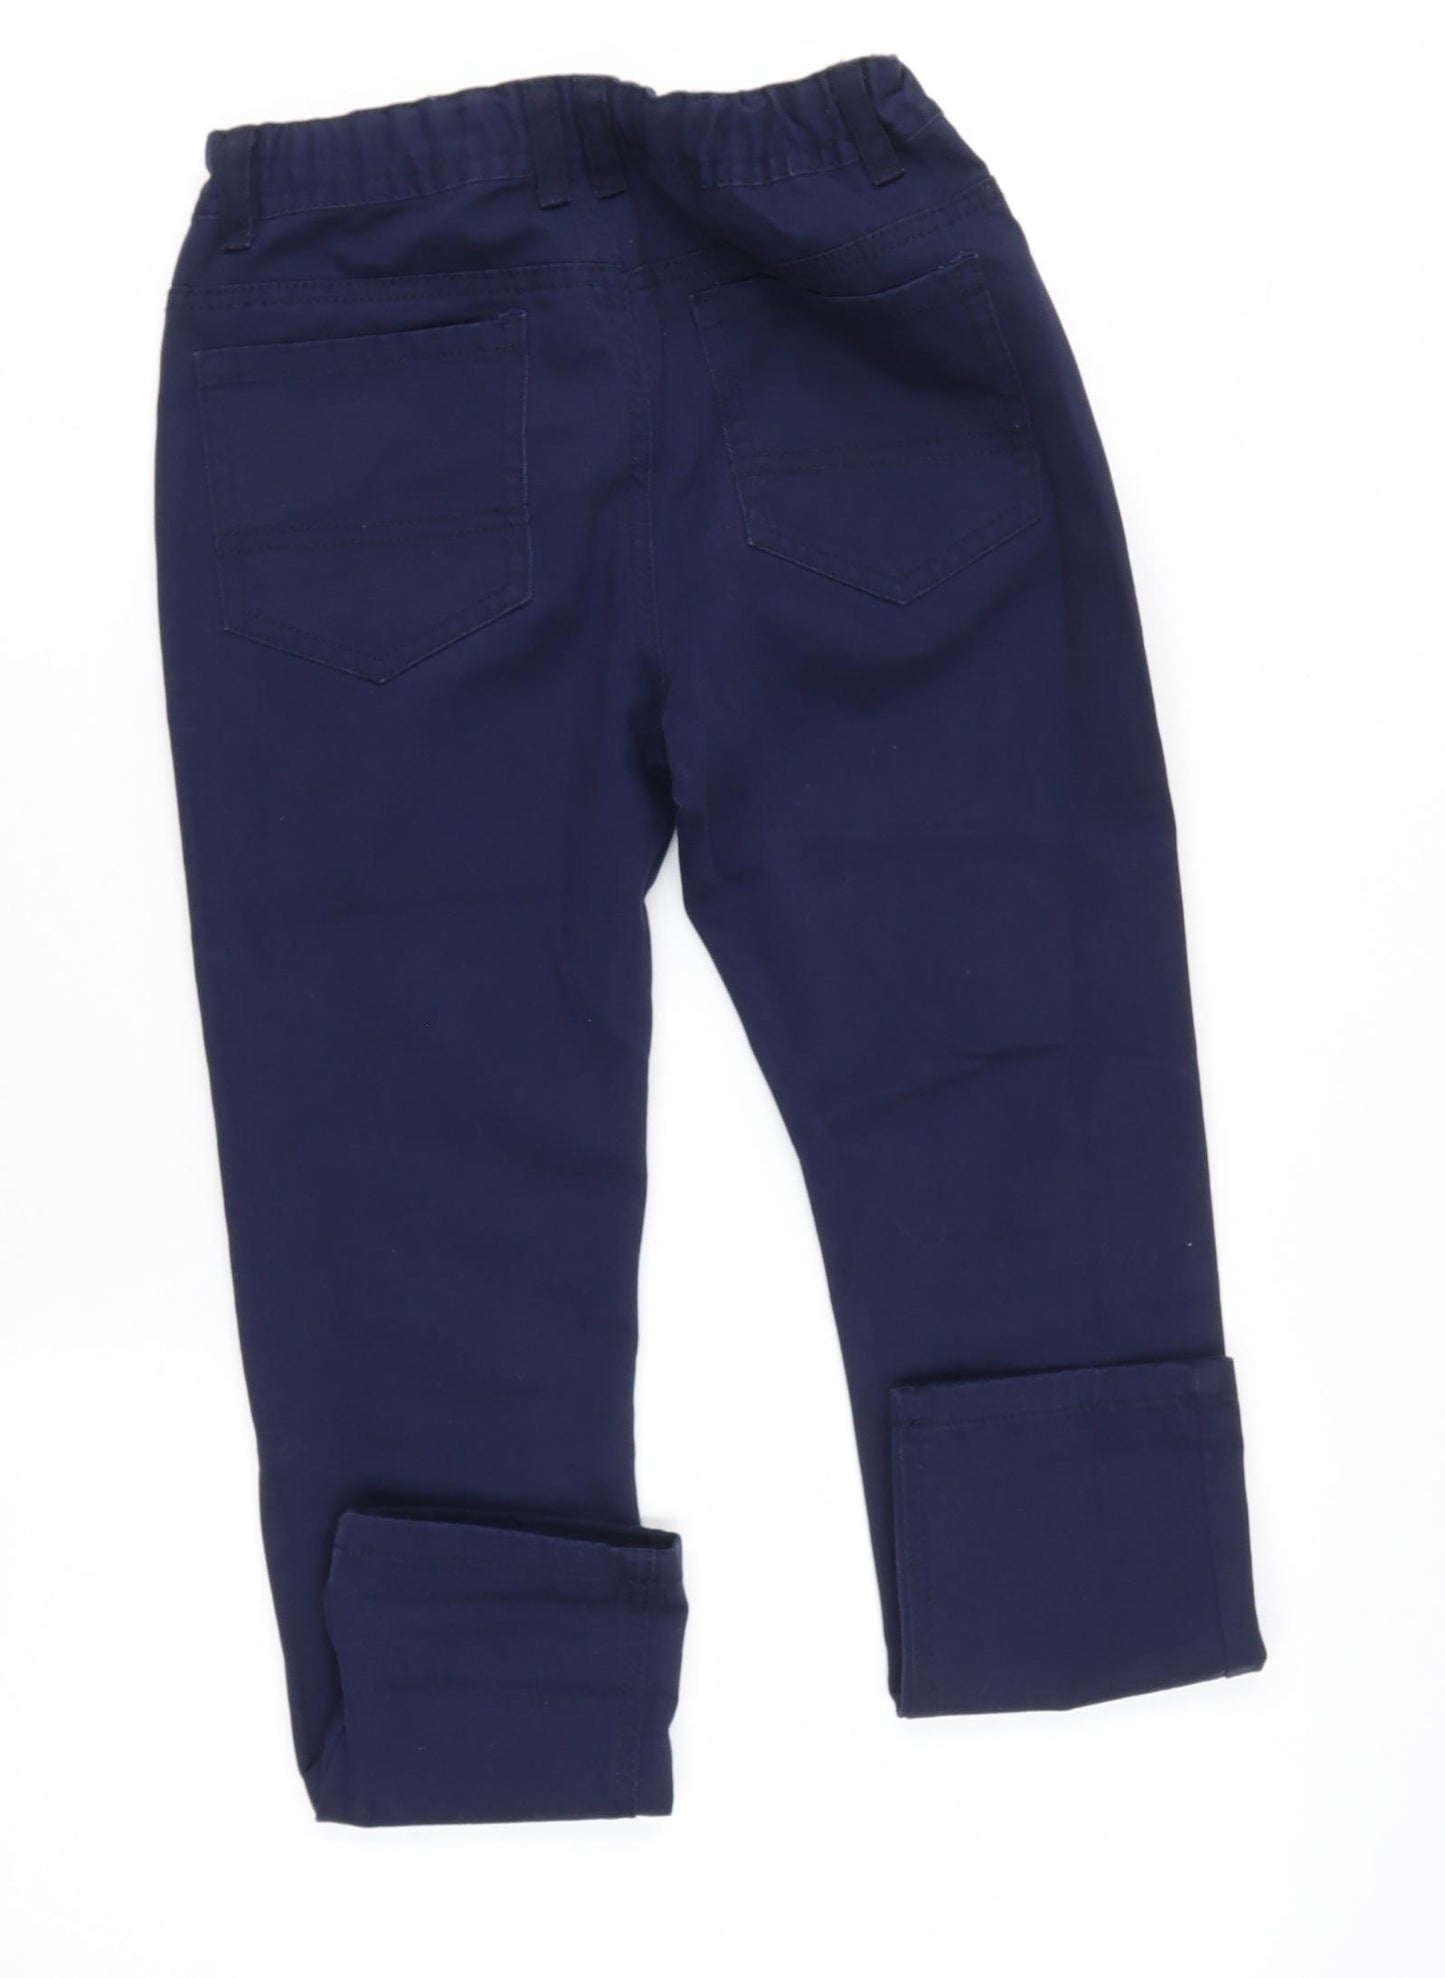 Denim & Co. Girls Blue  Cotton Skinny Jeans Size 9-10 Years  Regular